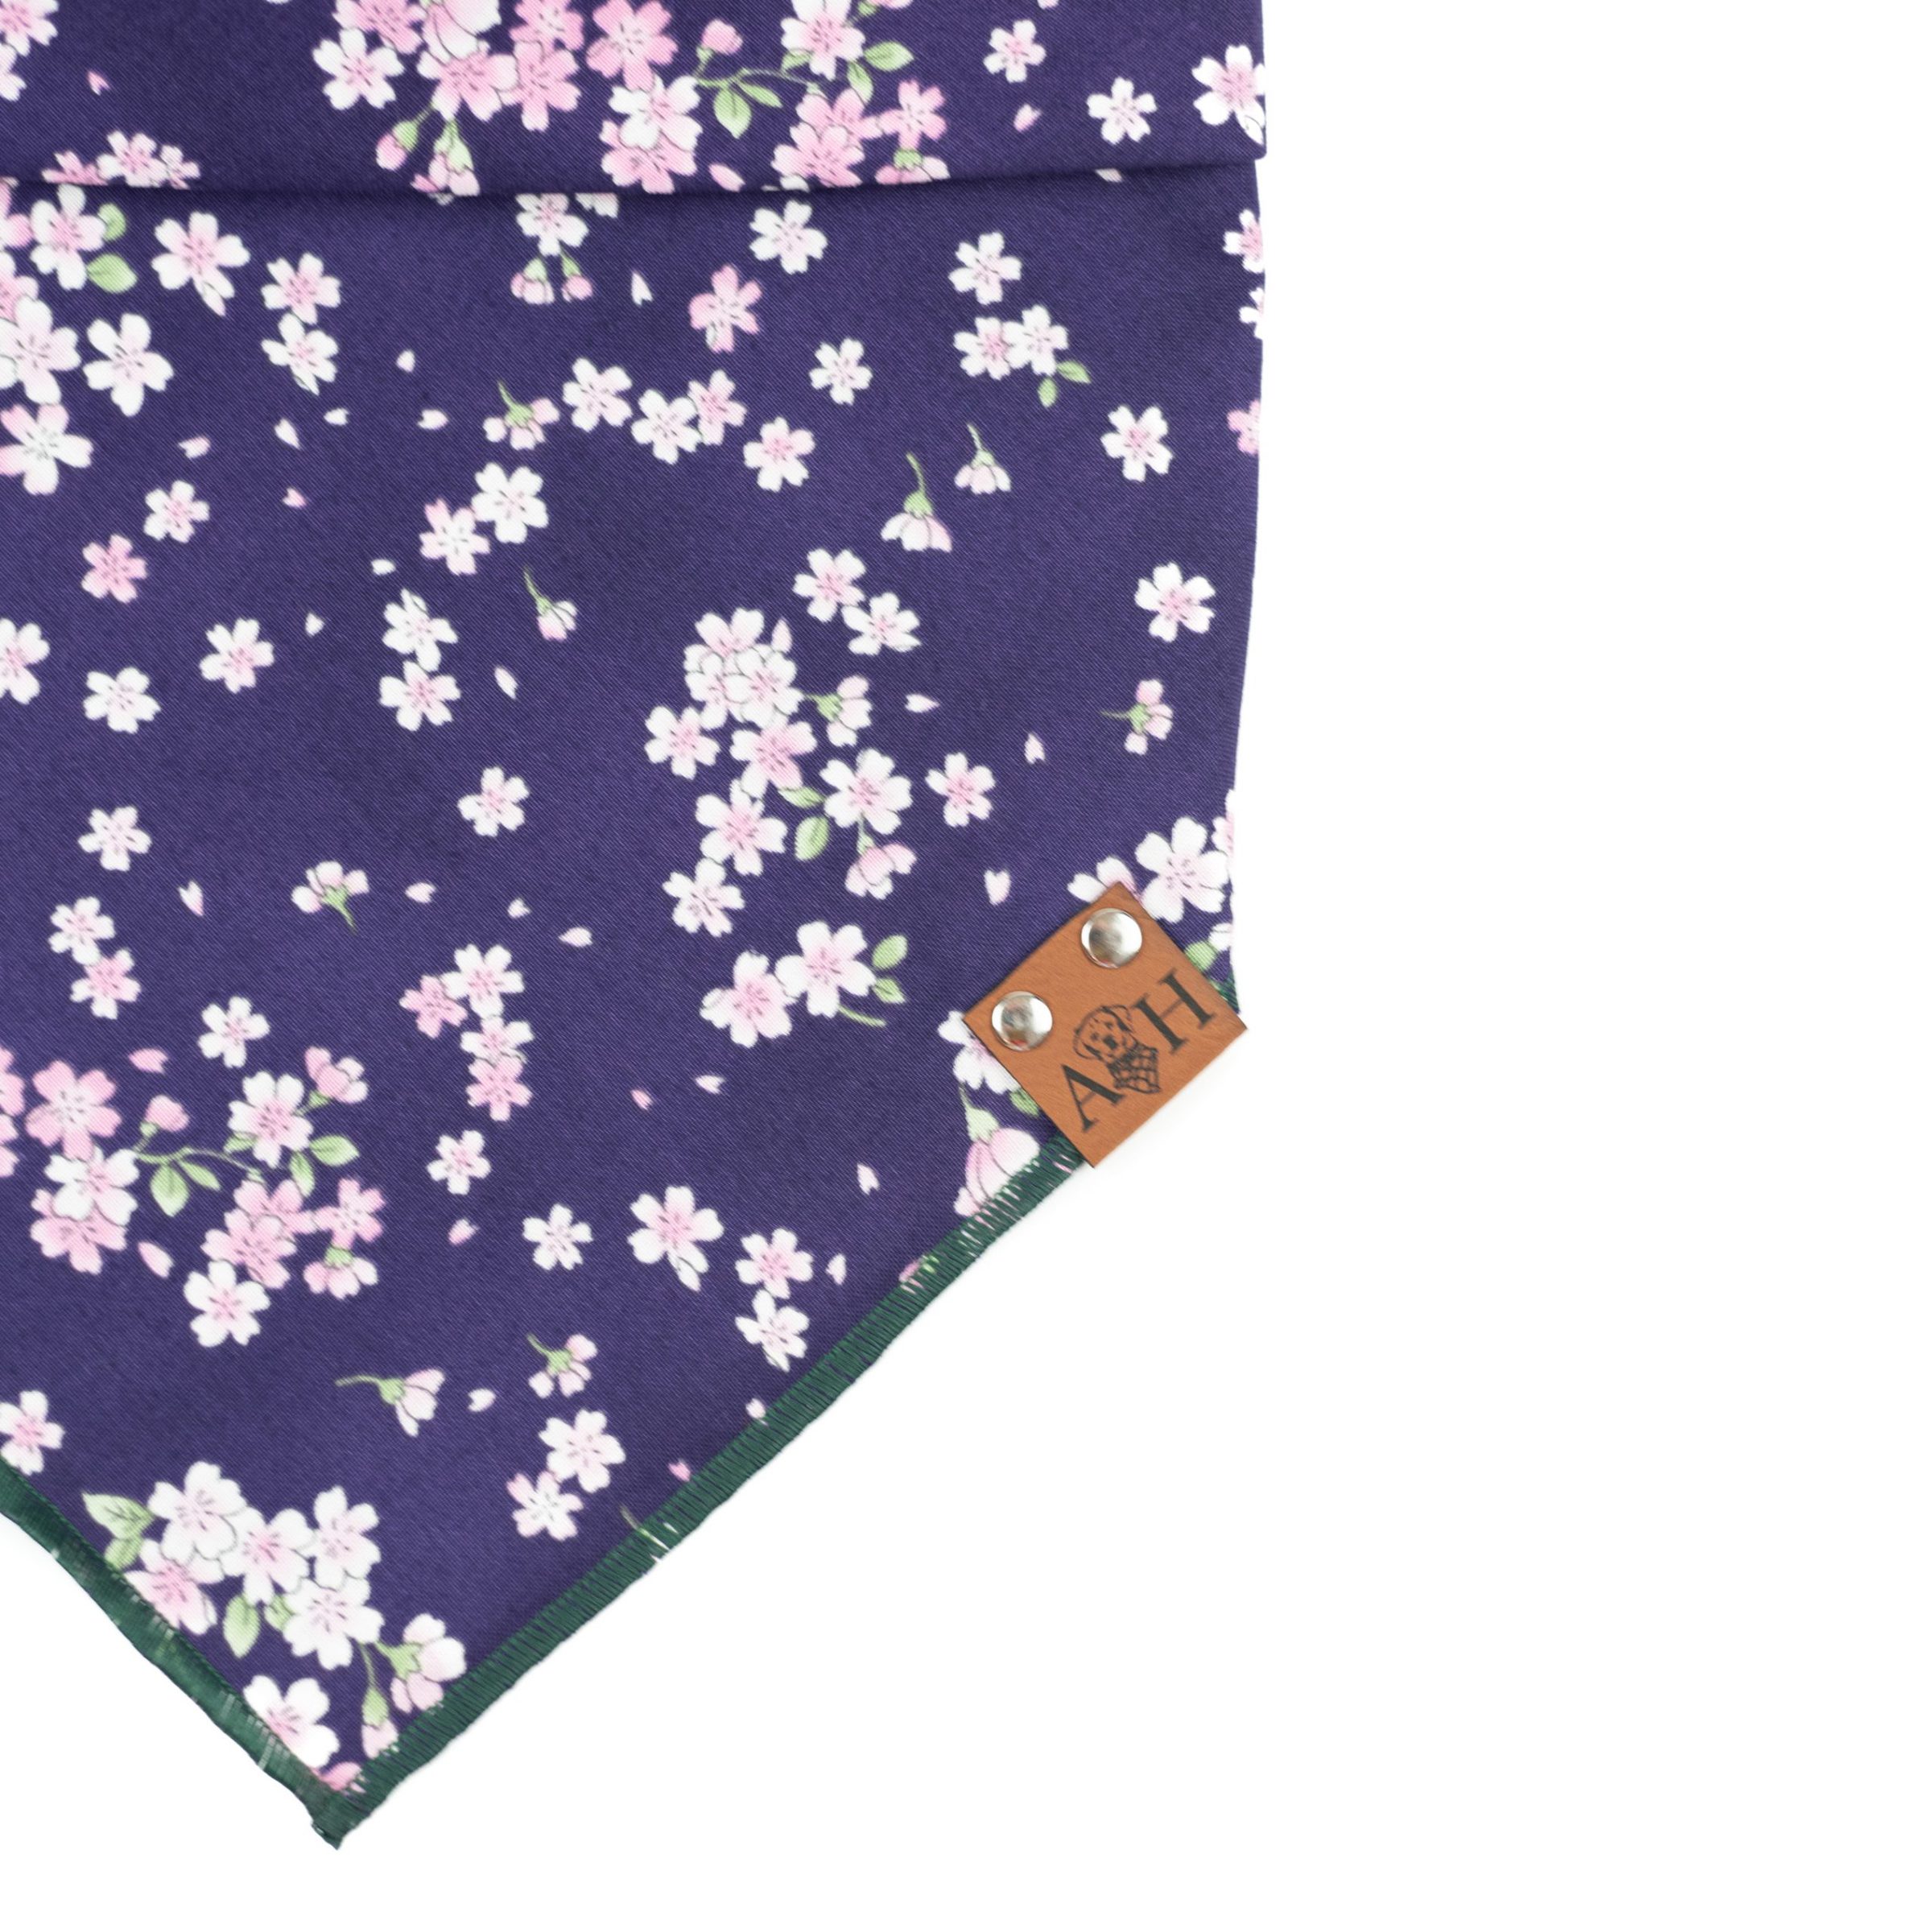 Thalia dog bandana with purple background and pink cherry blossoms